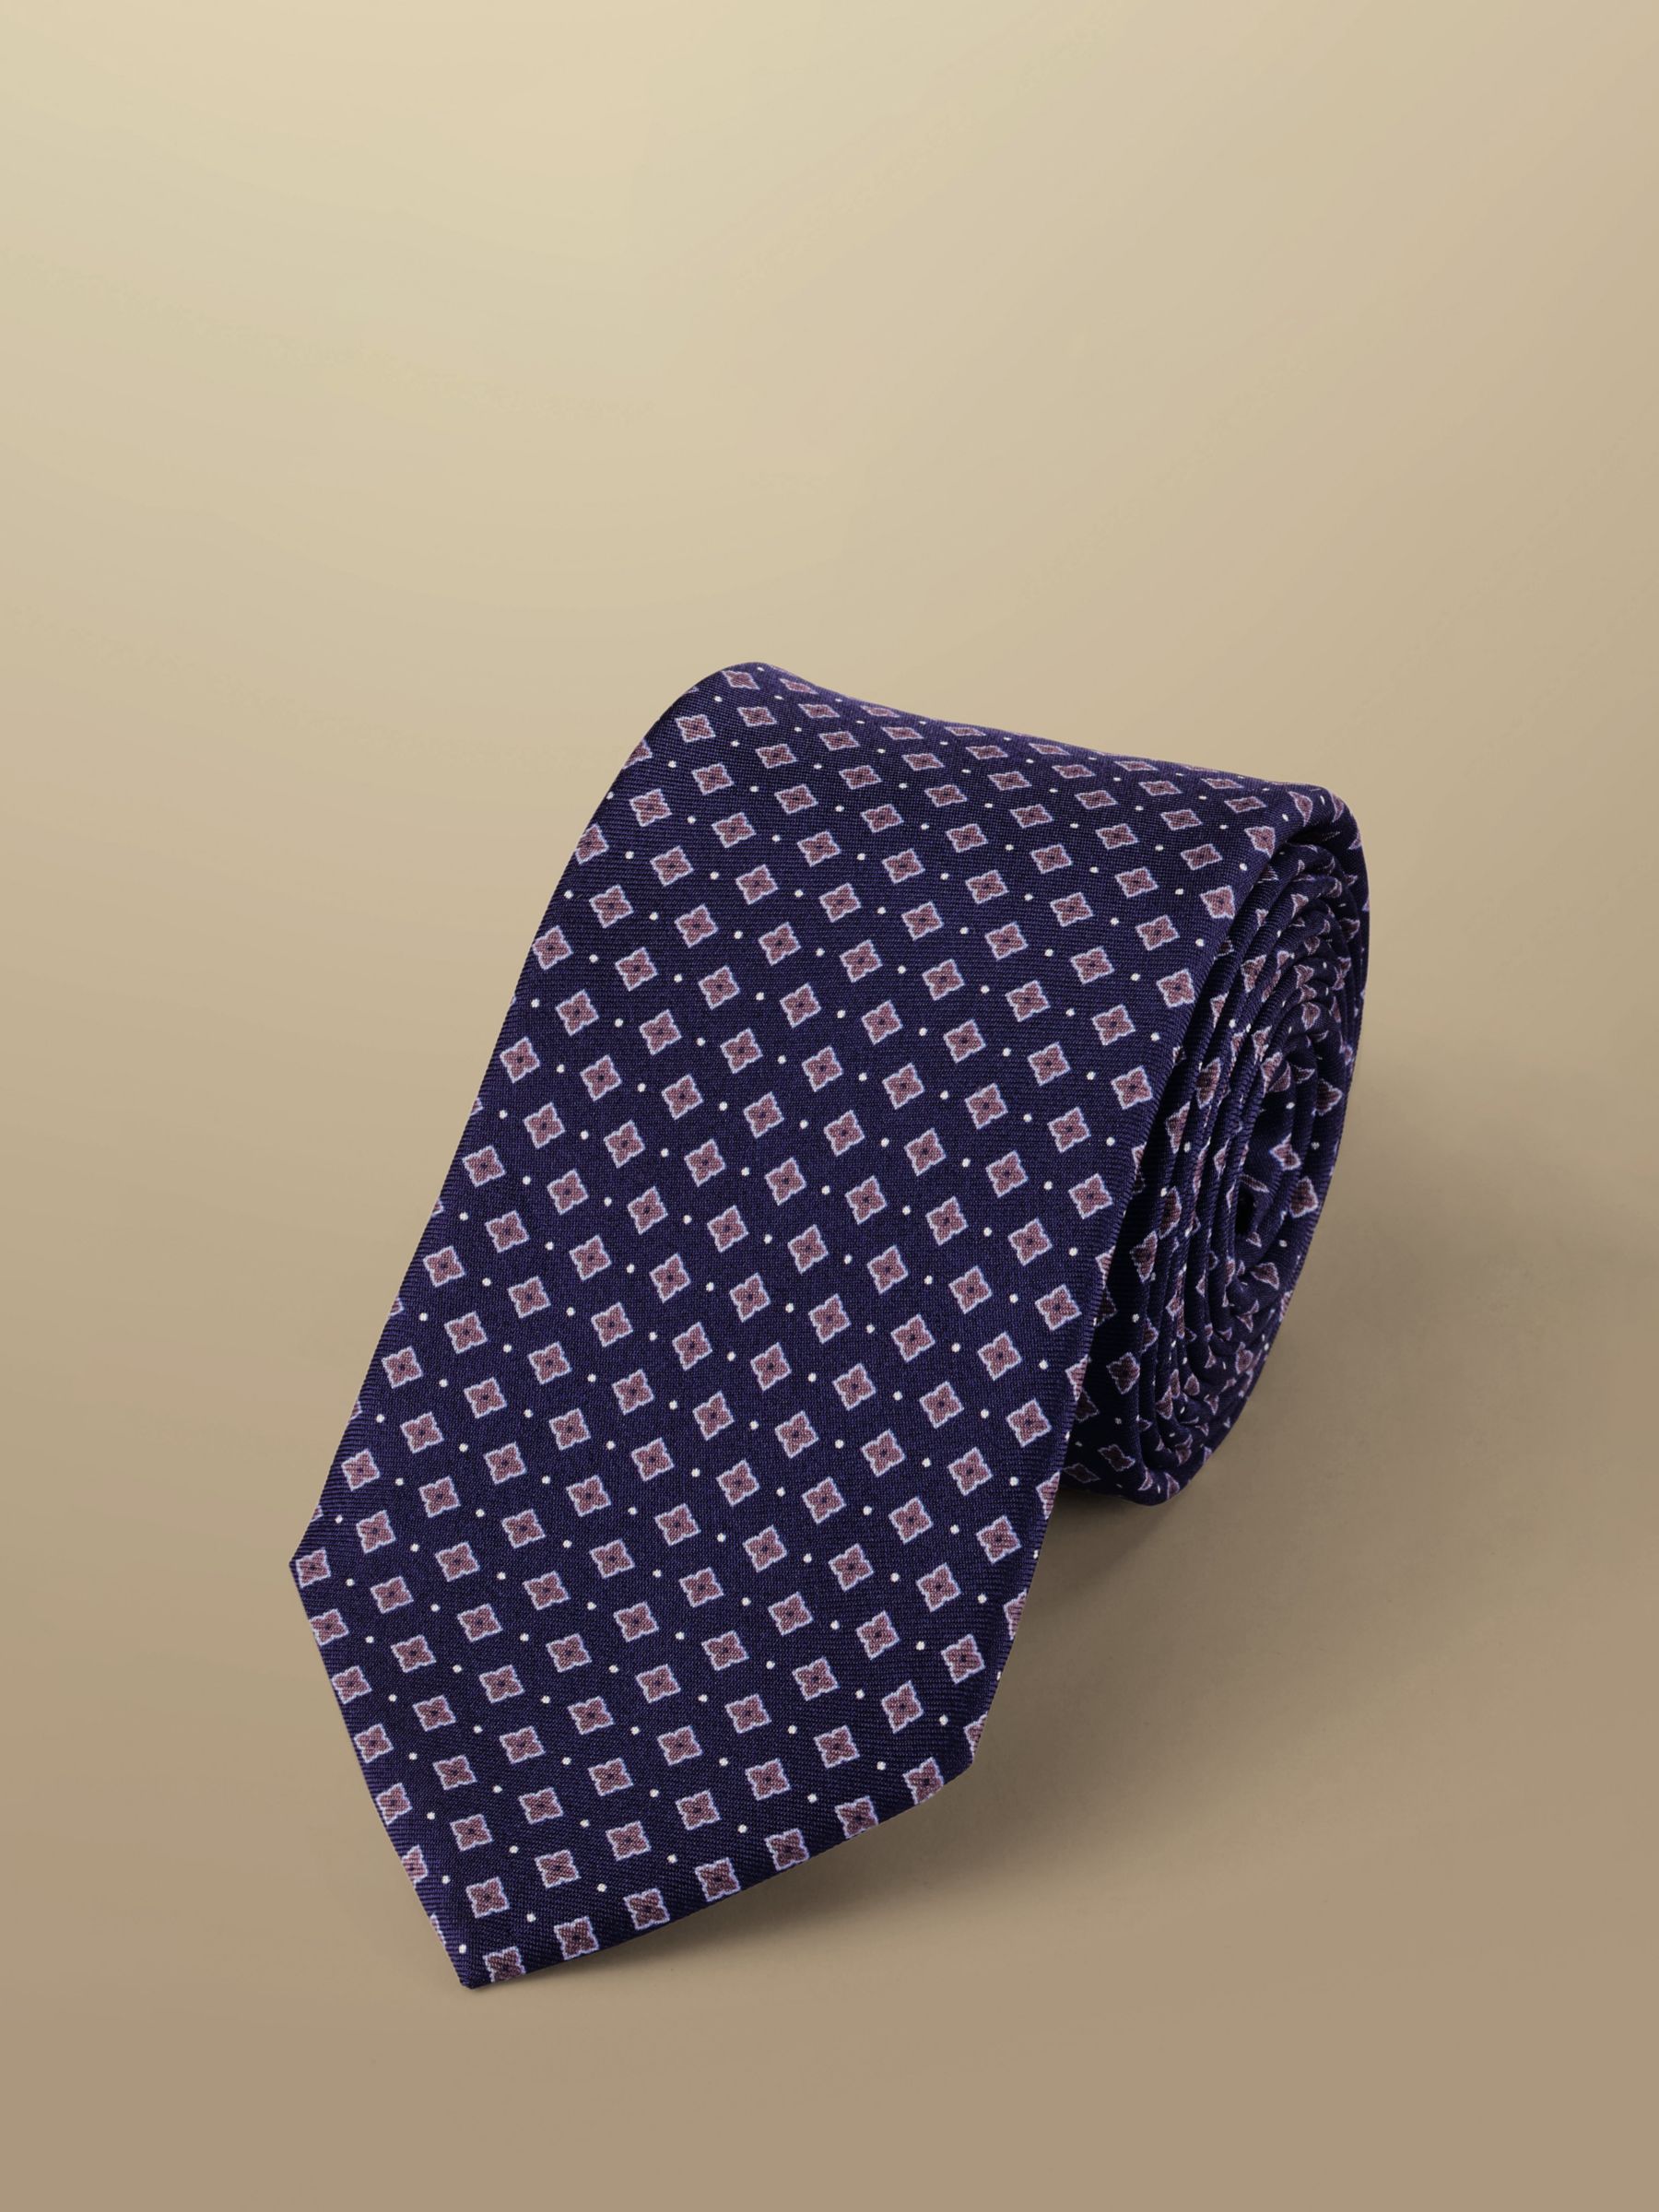 Charles Tyrwhitt Medallion Print Silk Slim Tie, Royal Blue, One Size